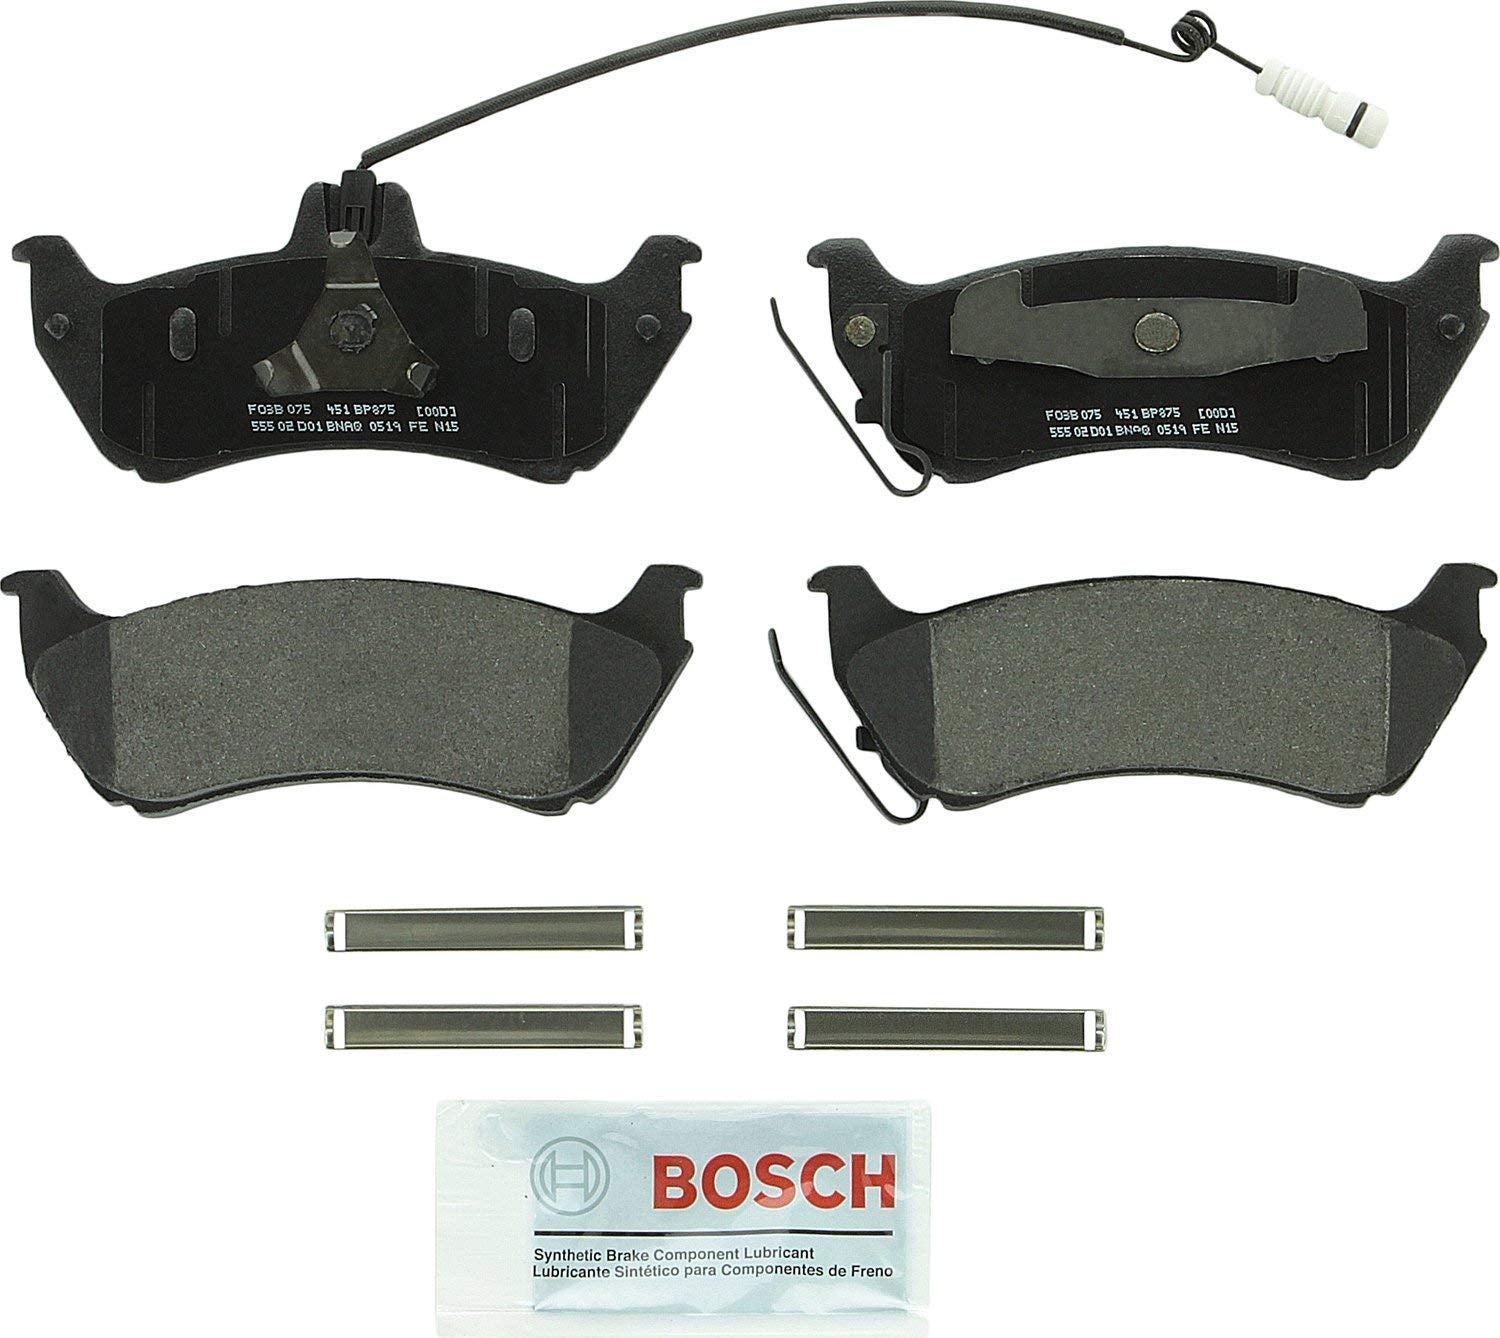 Bosch BP875 QuietCast Premium Semi-Metallic Disc Brake Pad Set For Mercedes-Benz: 1998-2003 ML320, 2003-2005 ML350, 1999 ML430; Rear